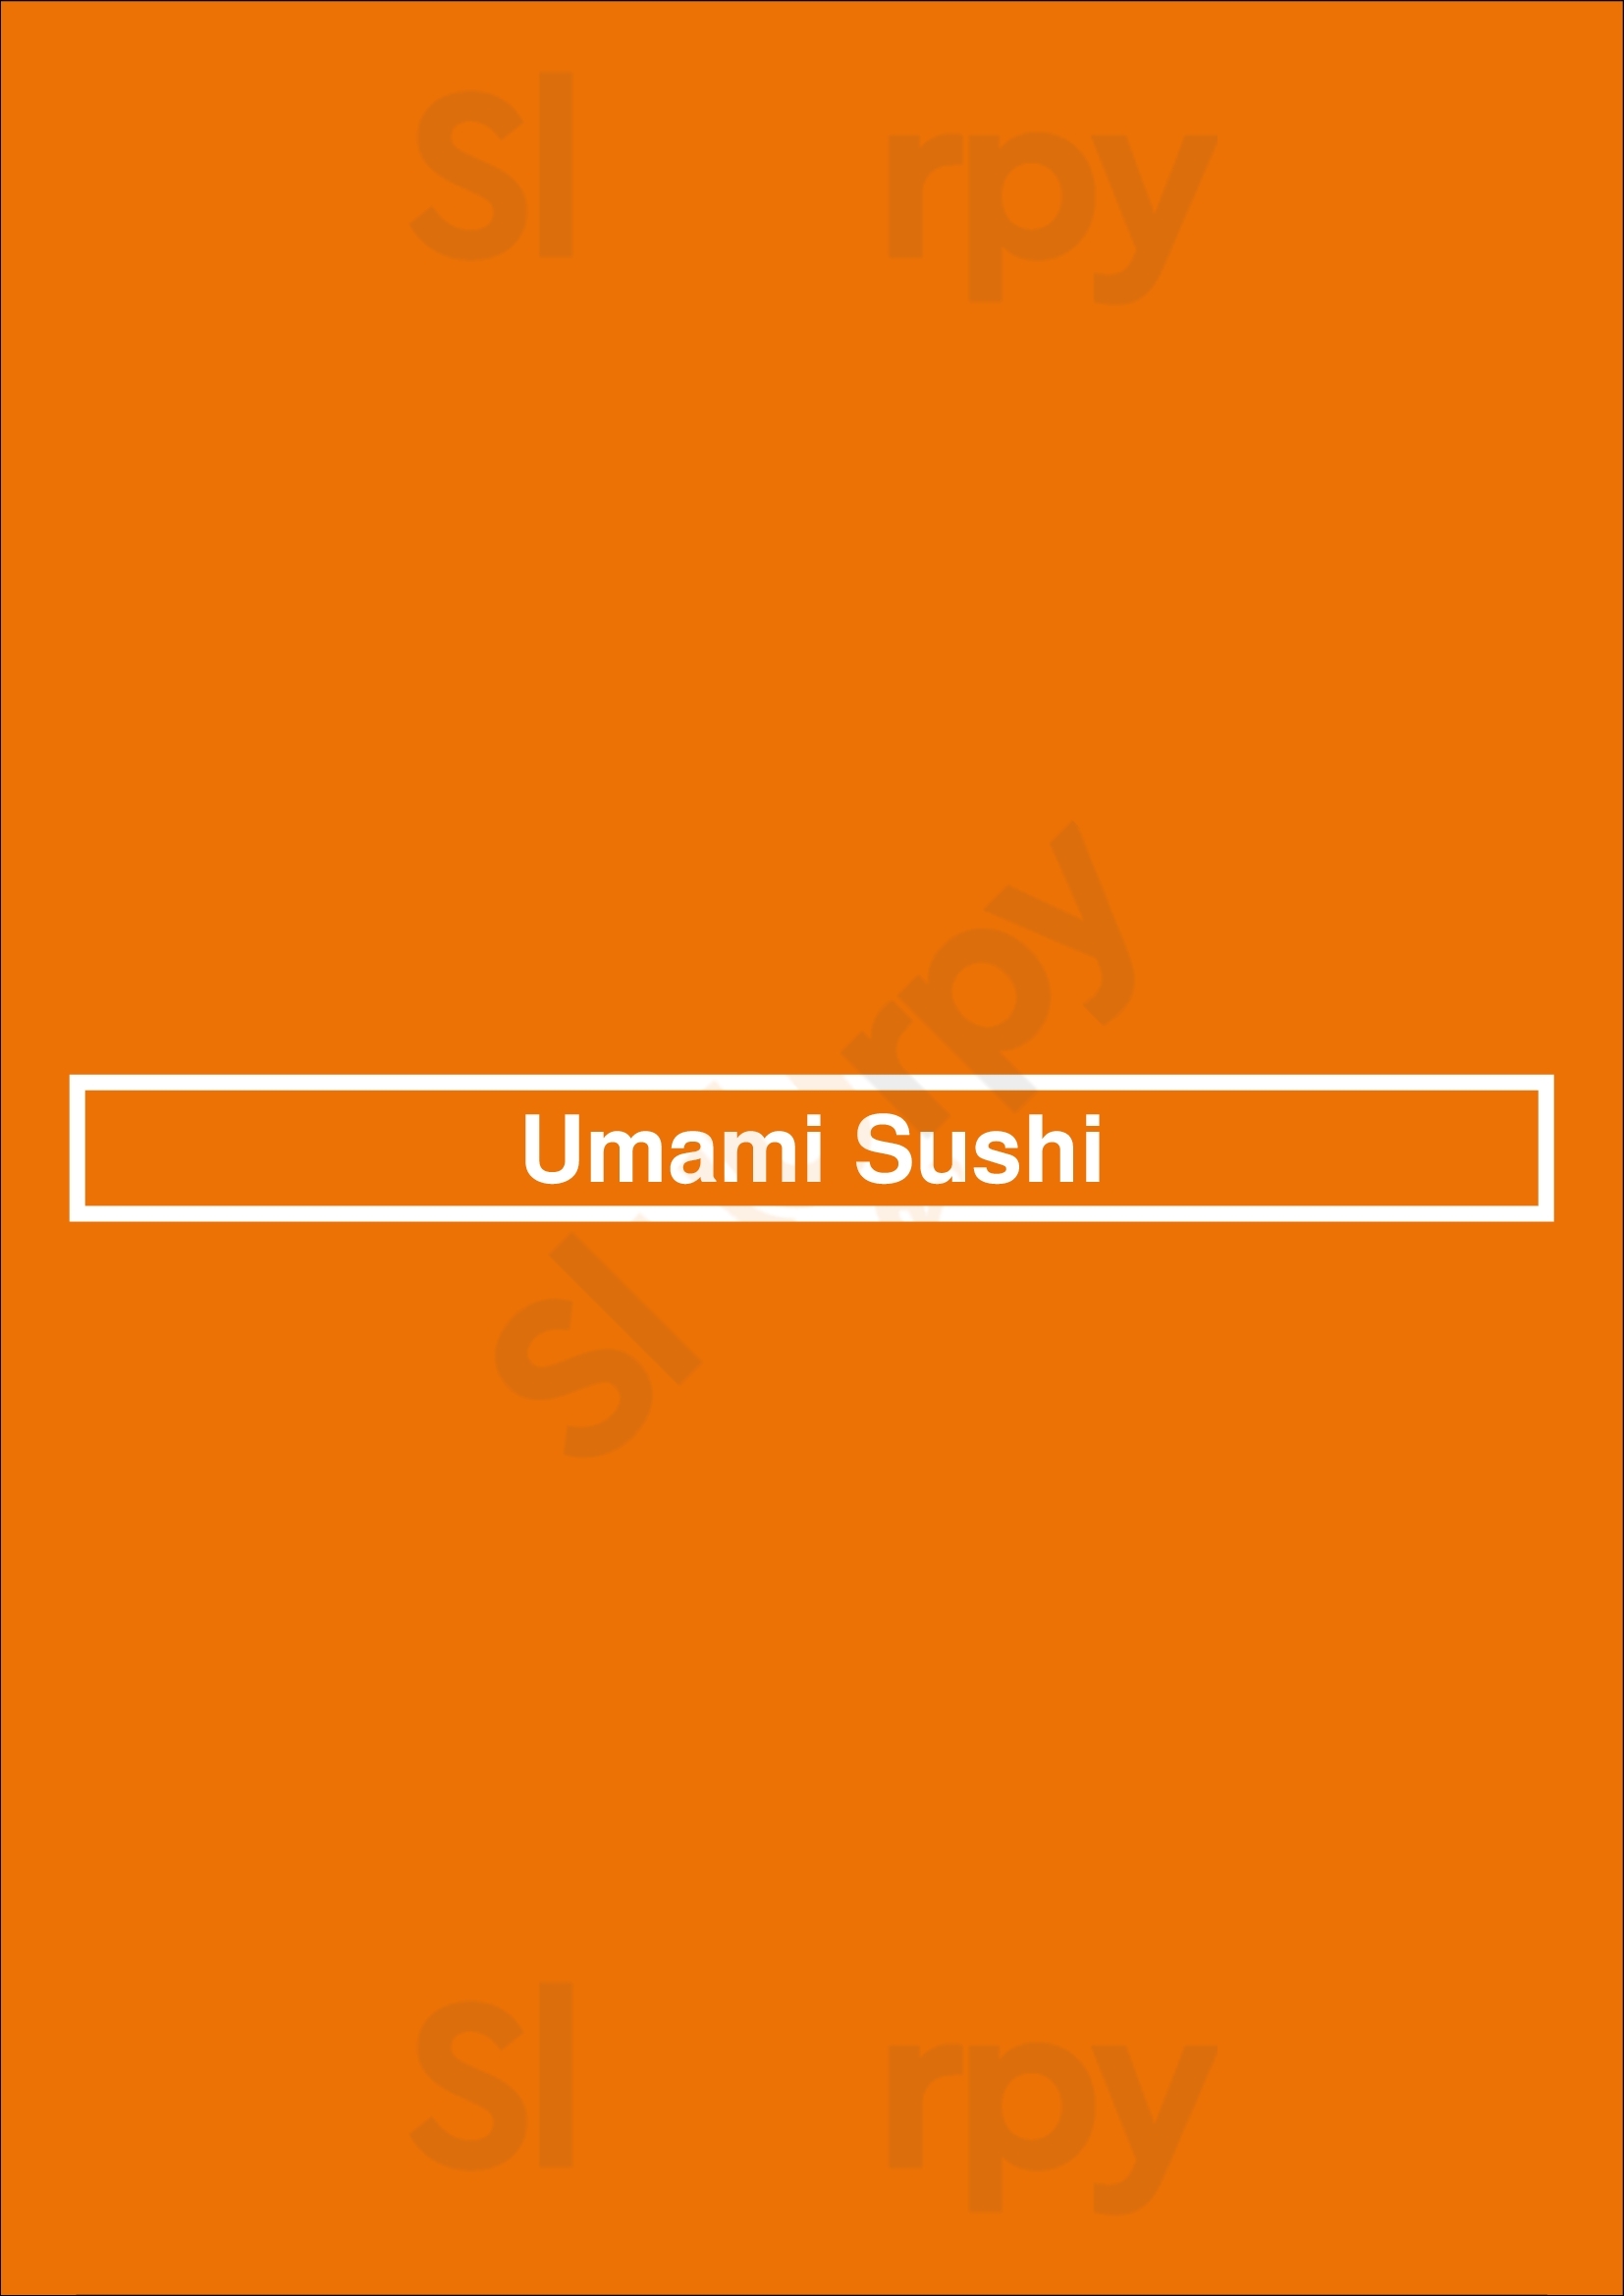 Umami Sushi New York City Menu - 1